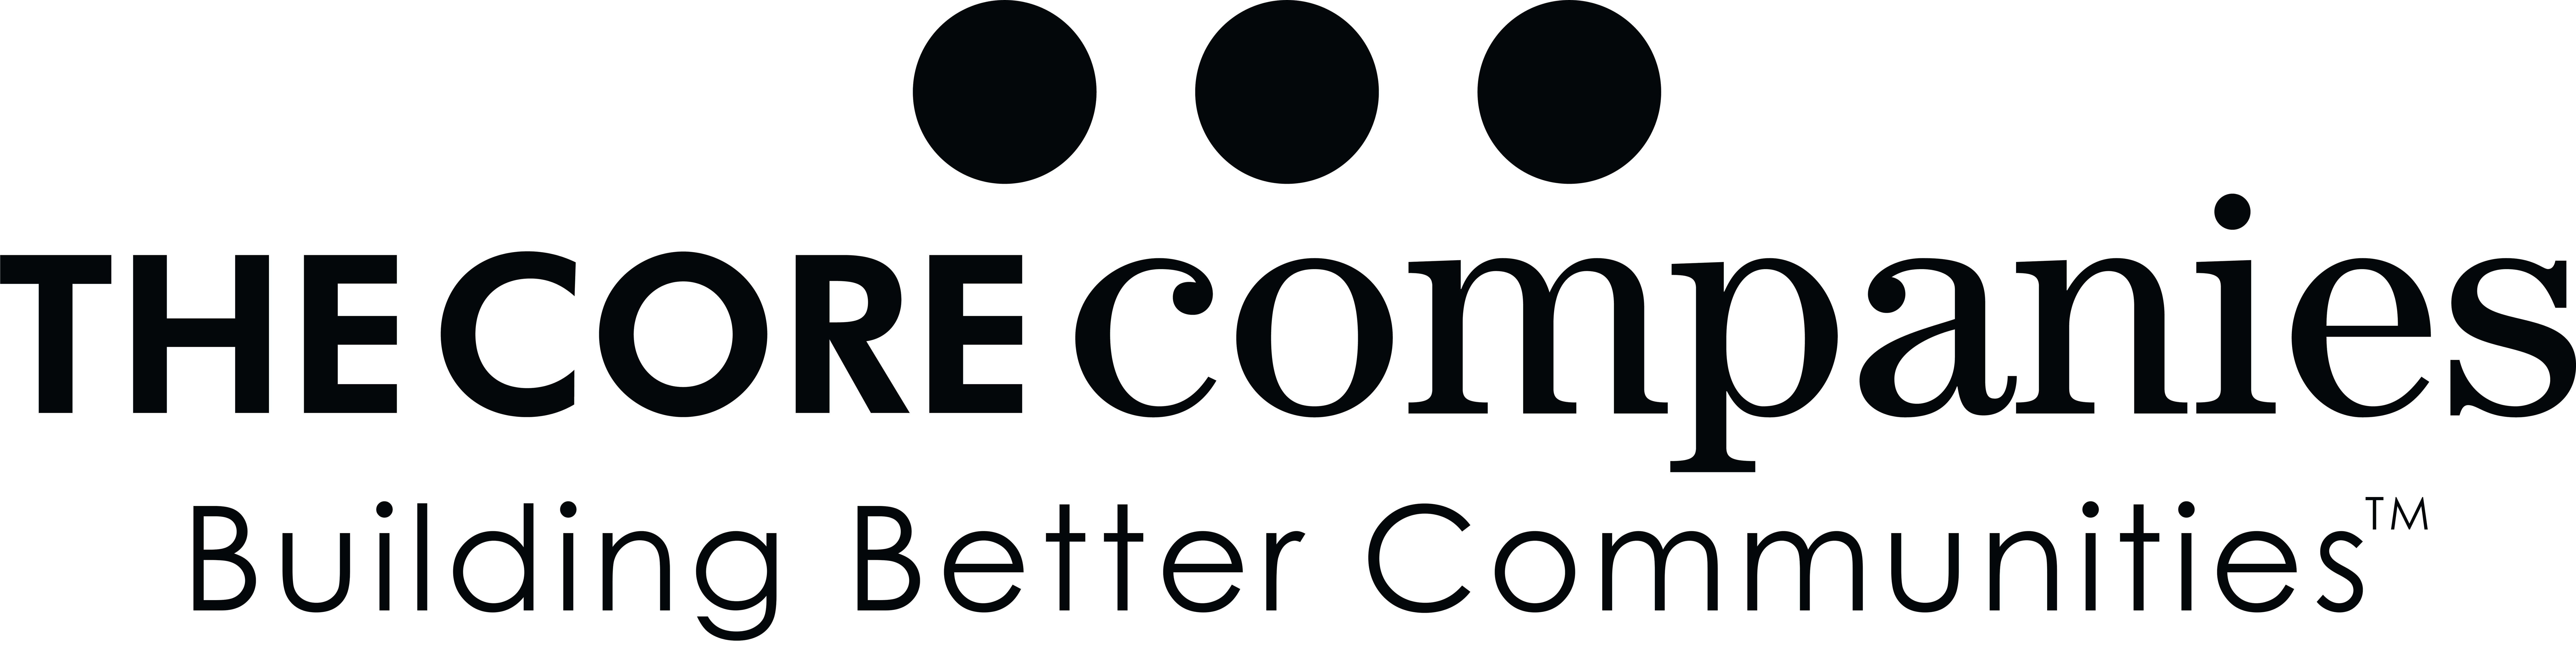 CORE Companies Logo - Communities_black